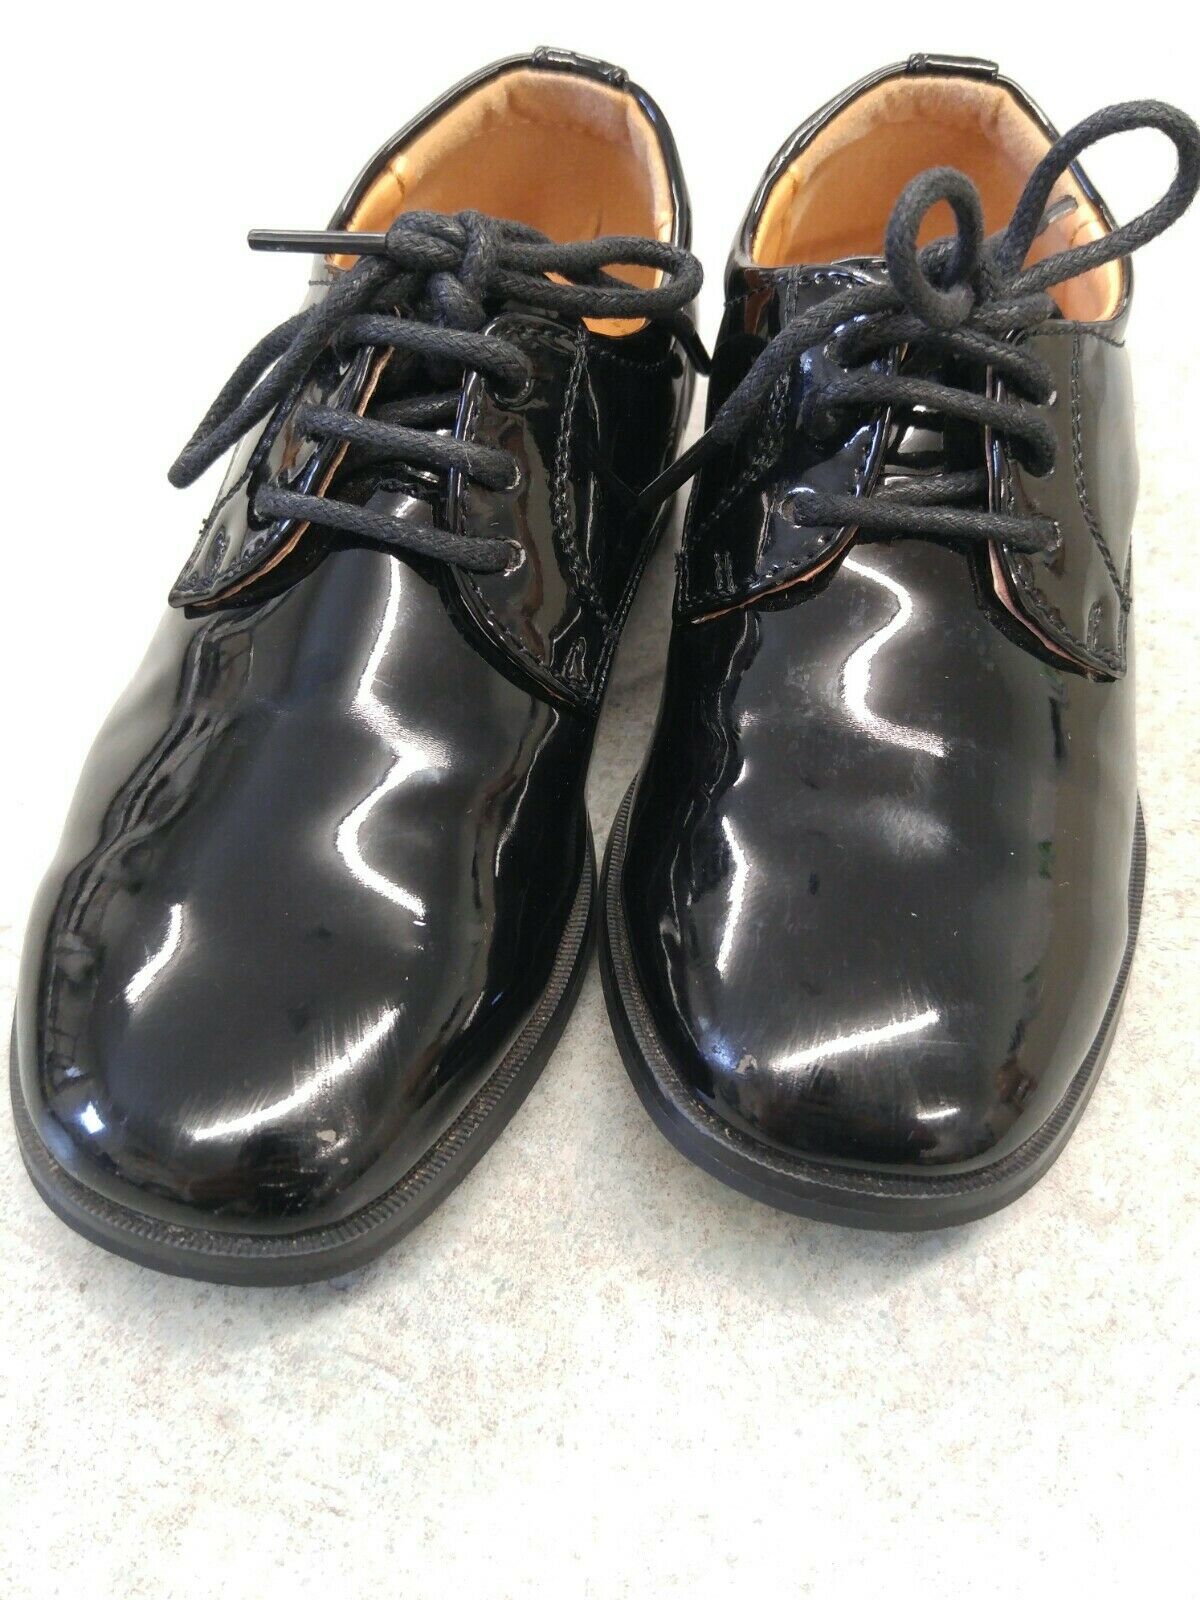 Toddler Boys Black Dress Shoes- Size 9